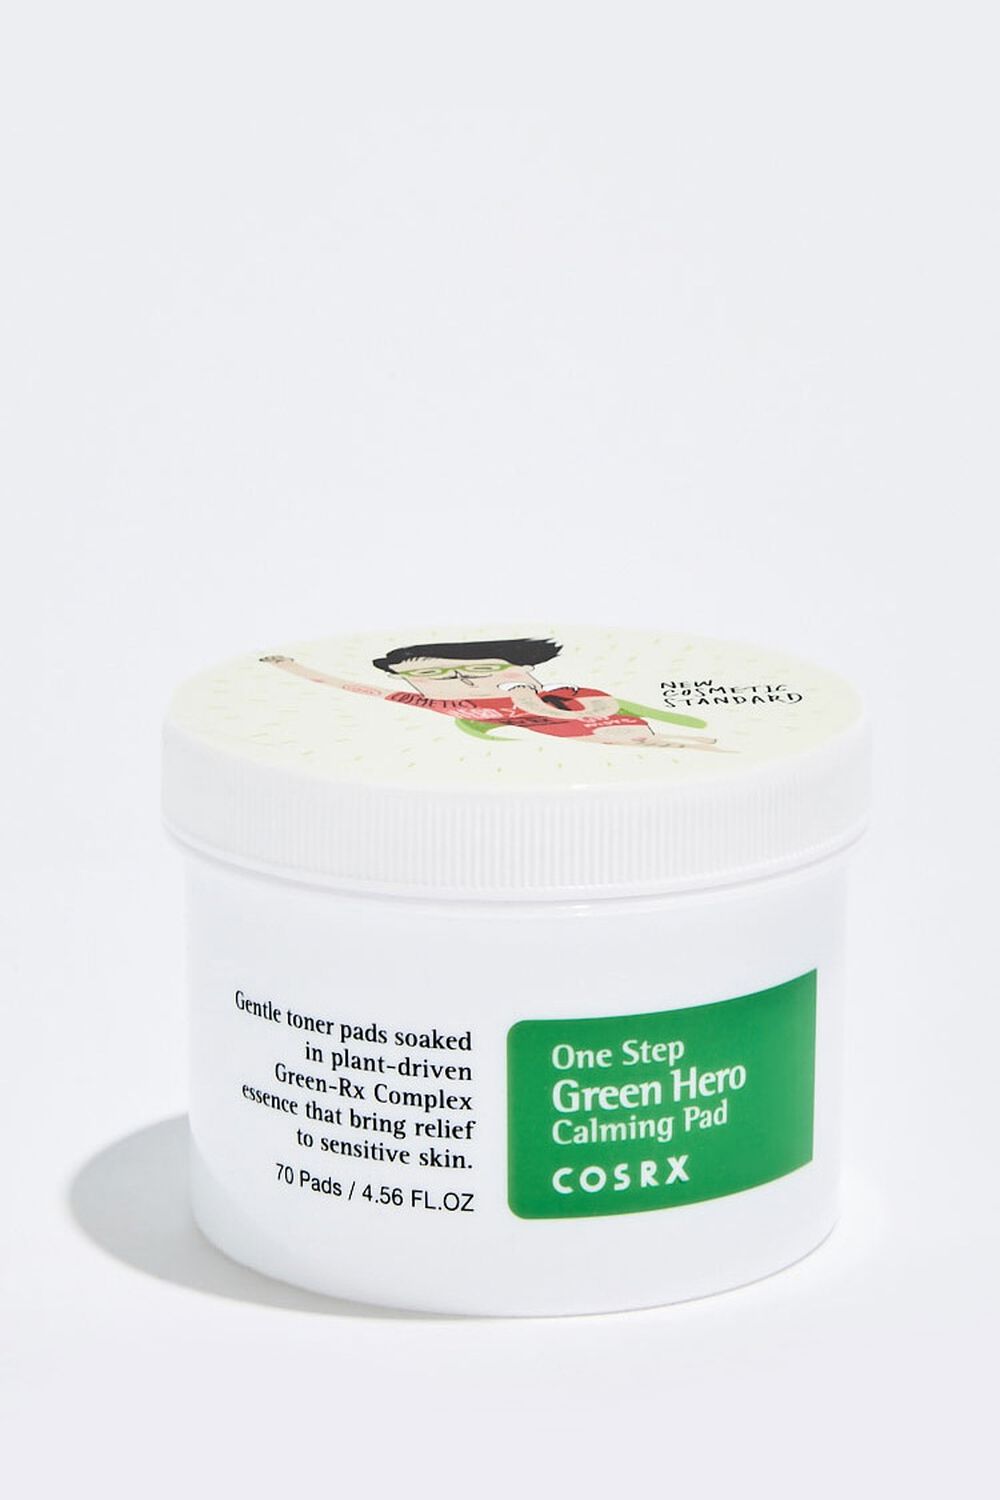 COSRX One Step Green Hero Calming Pads, image 2